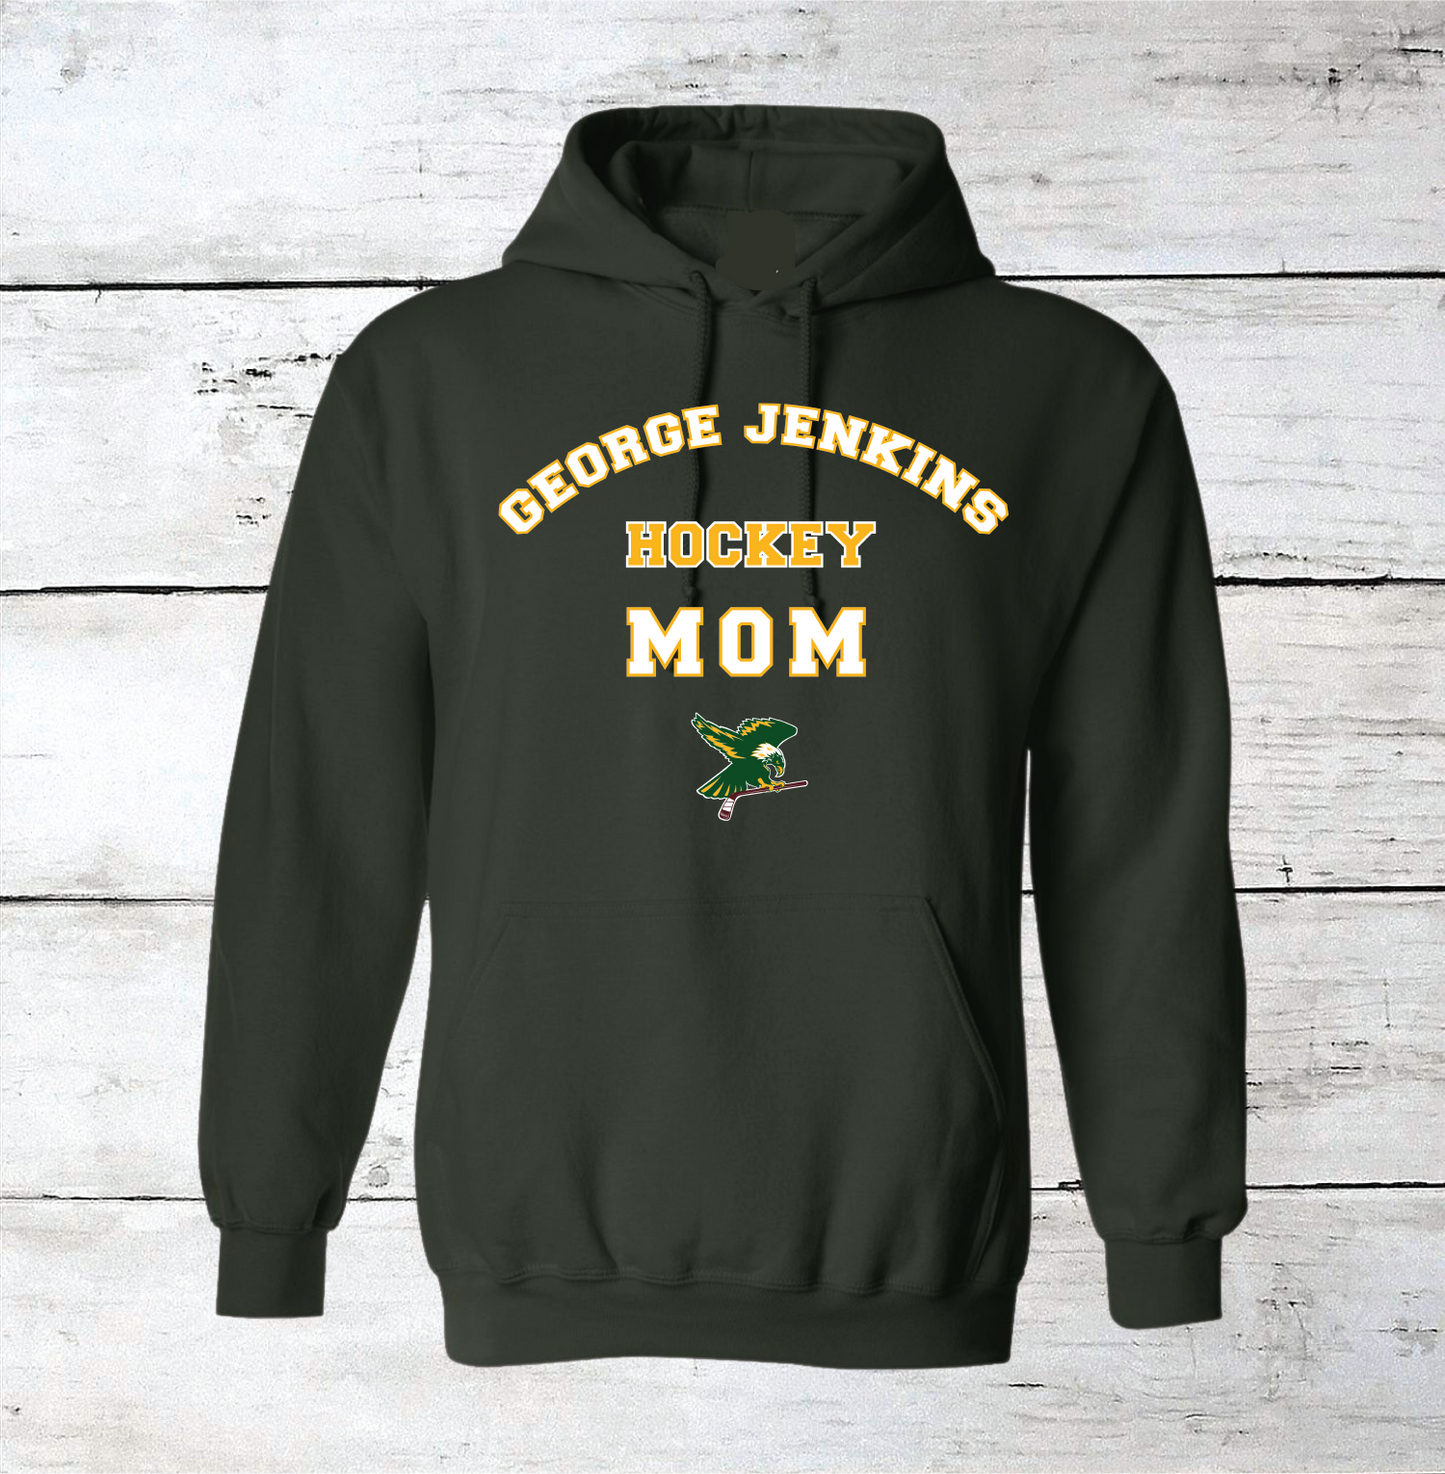 George Jenkins Hockey Mom Hoodies